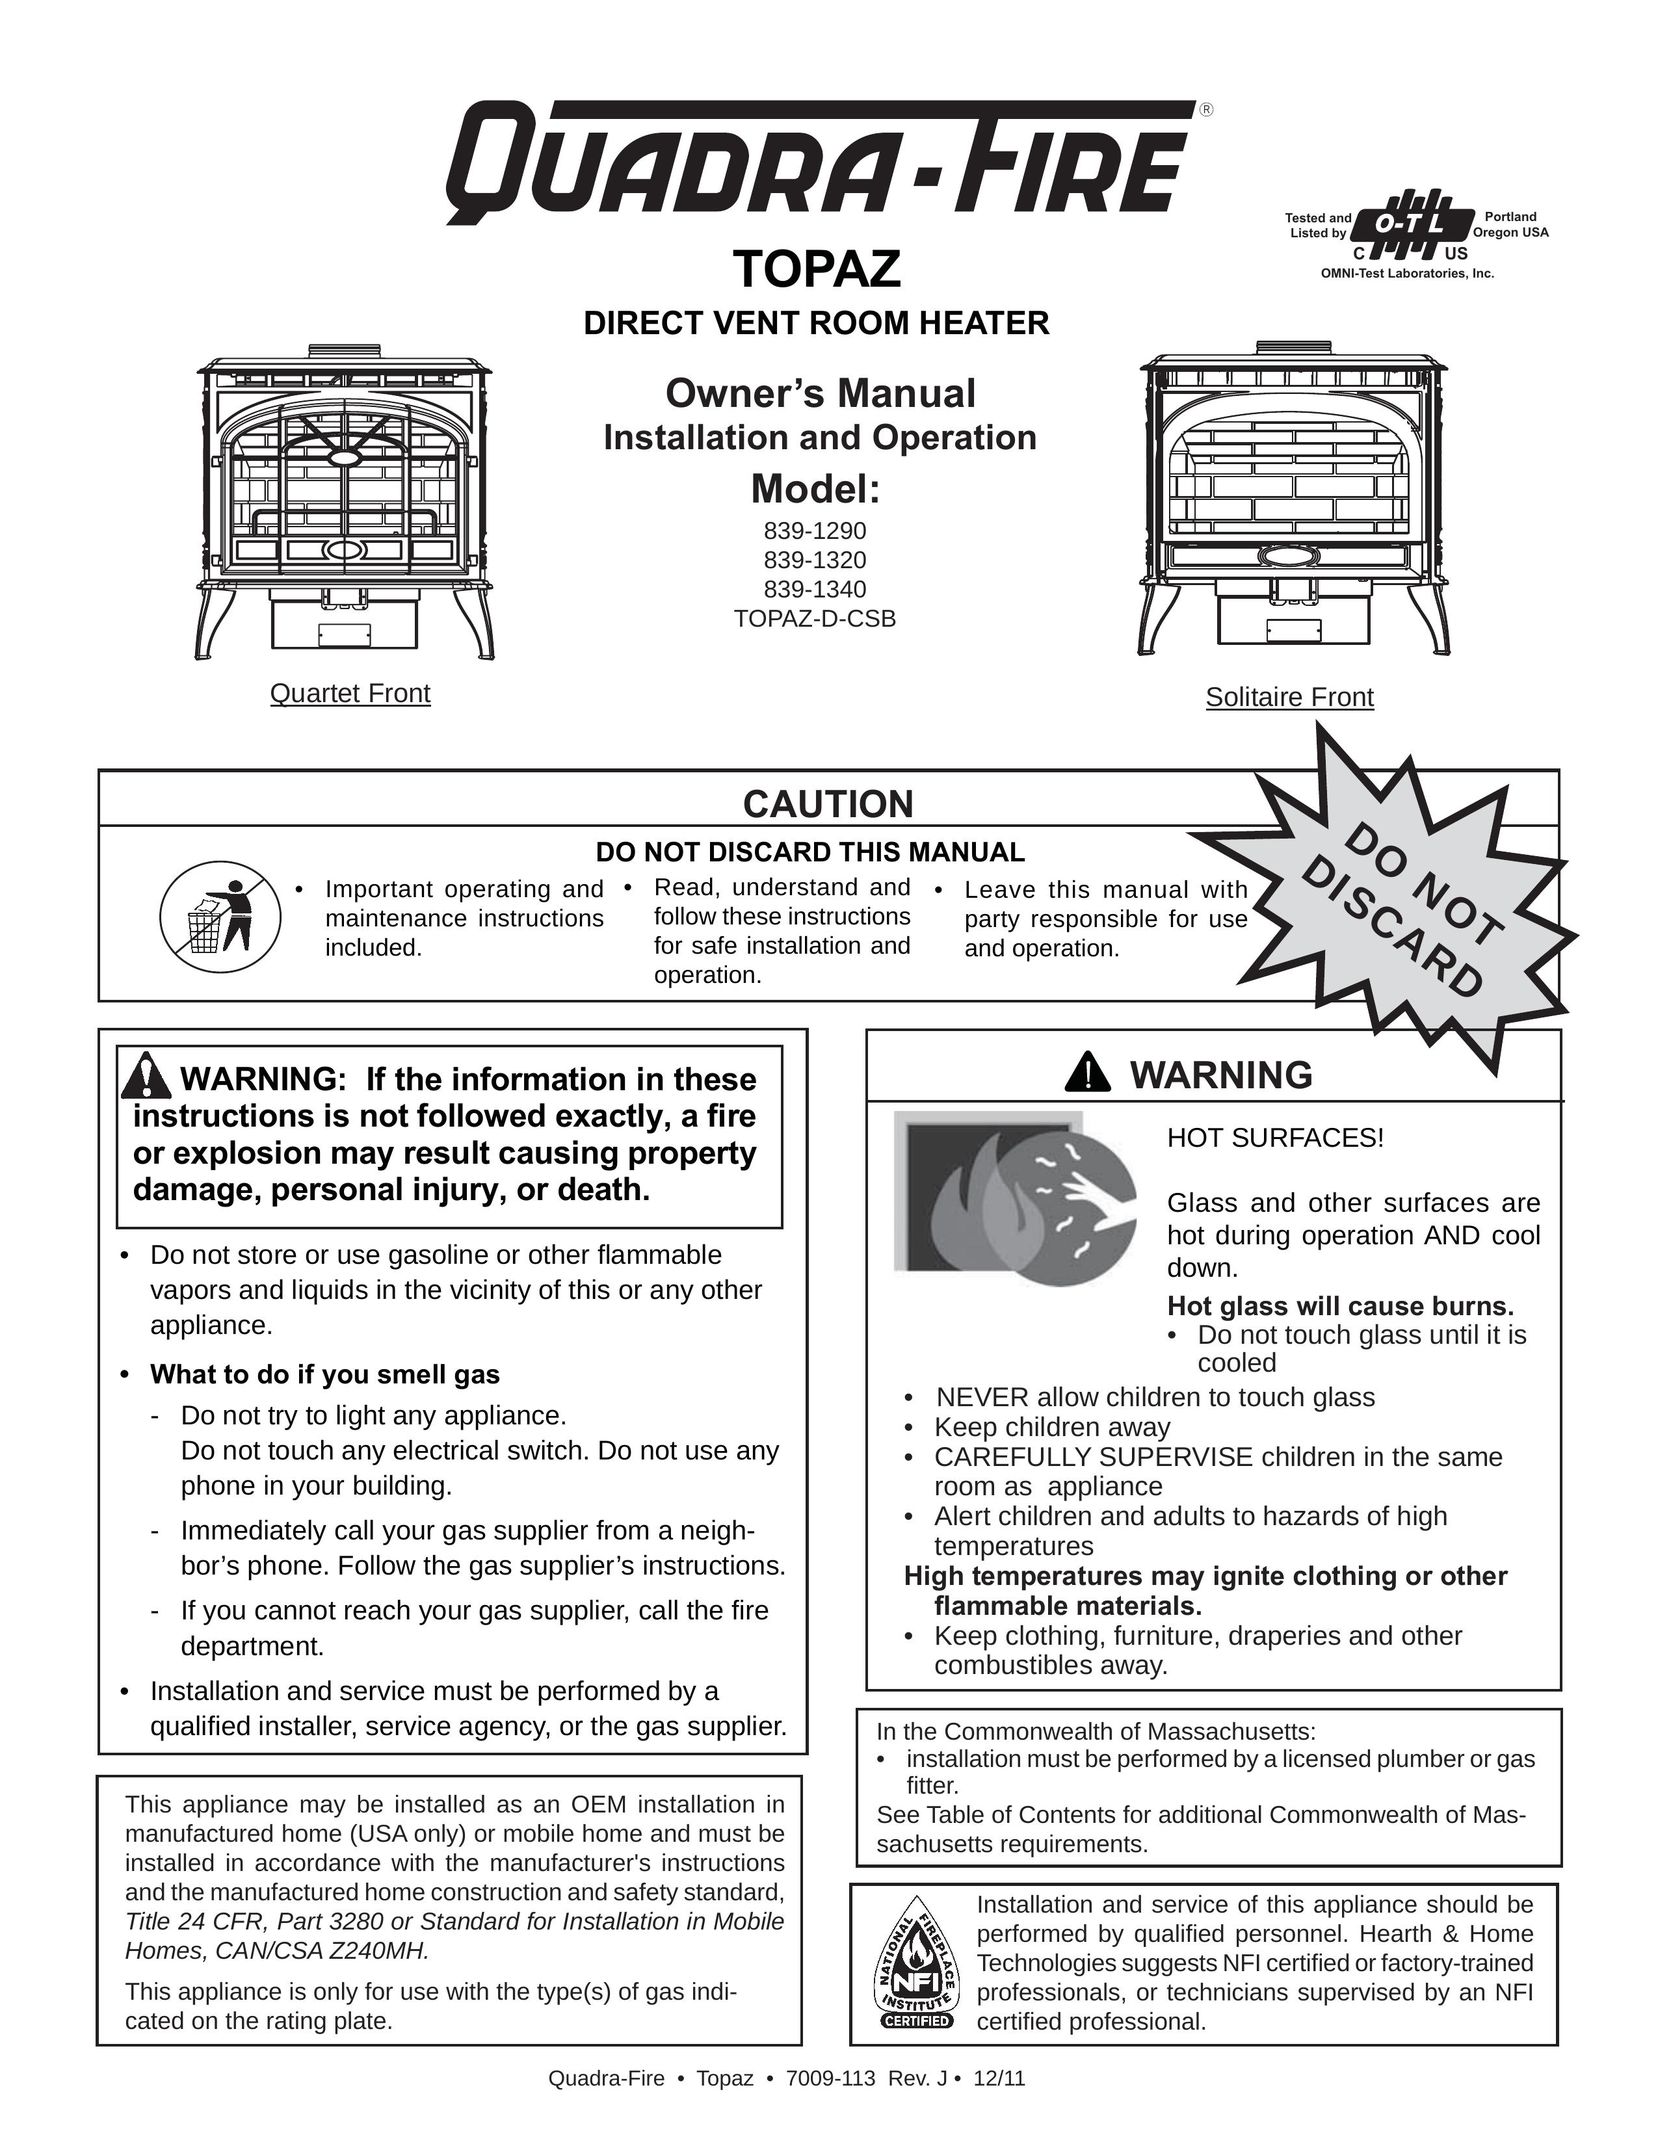 OmniTek 839-1340 Electric Heater User Manual